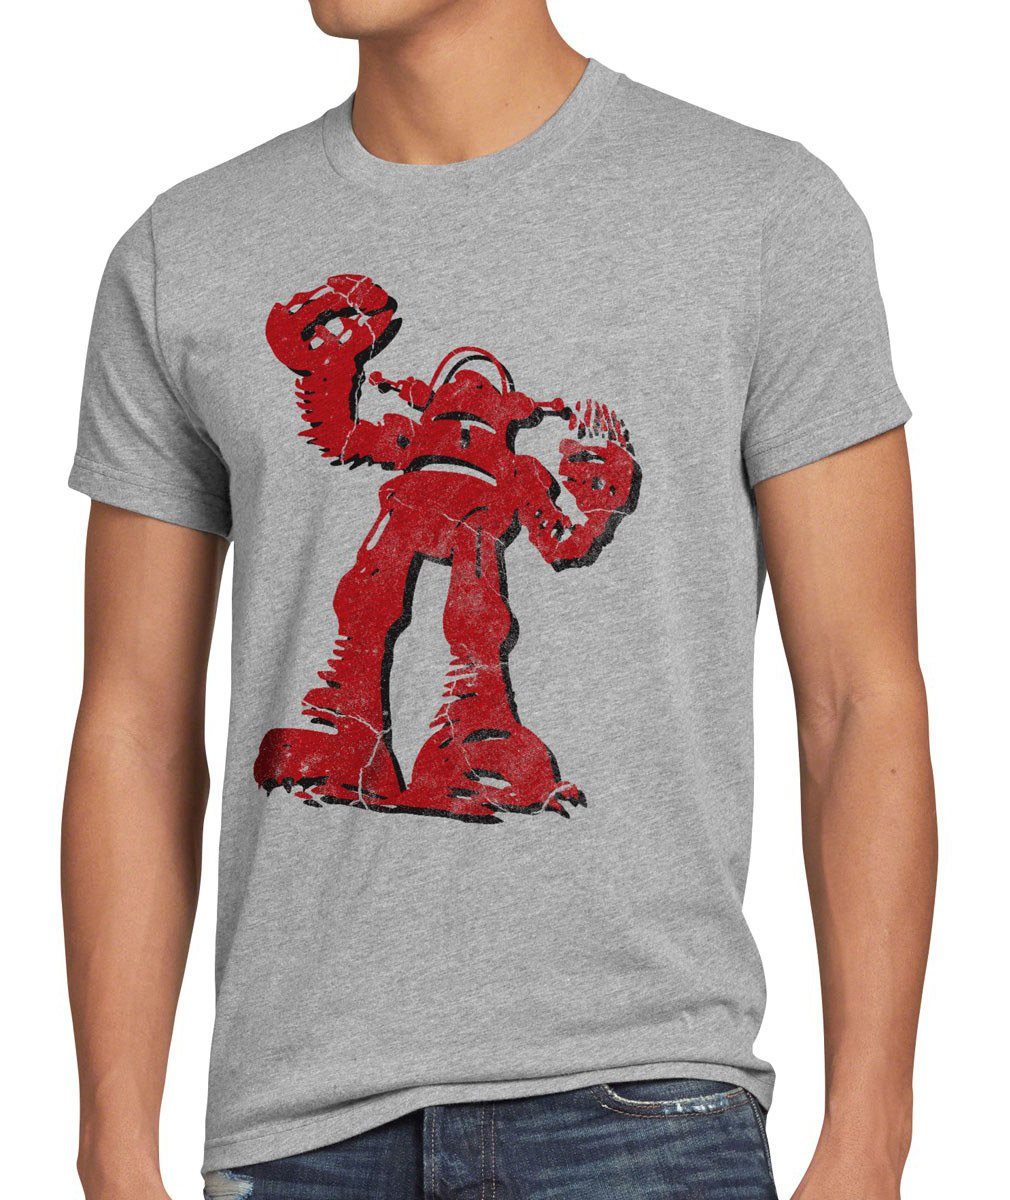 Theory Hero Big meliert Serie TV Robot grau Roboter Cooper Bang style3 Print-Shirt T-Shirt Herren Comic Sheldon